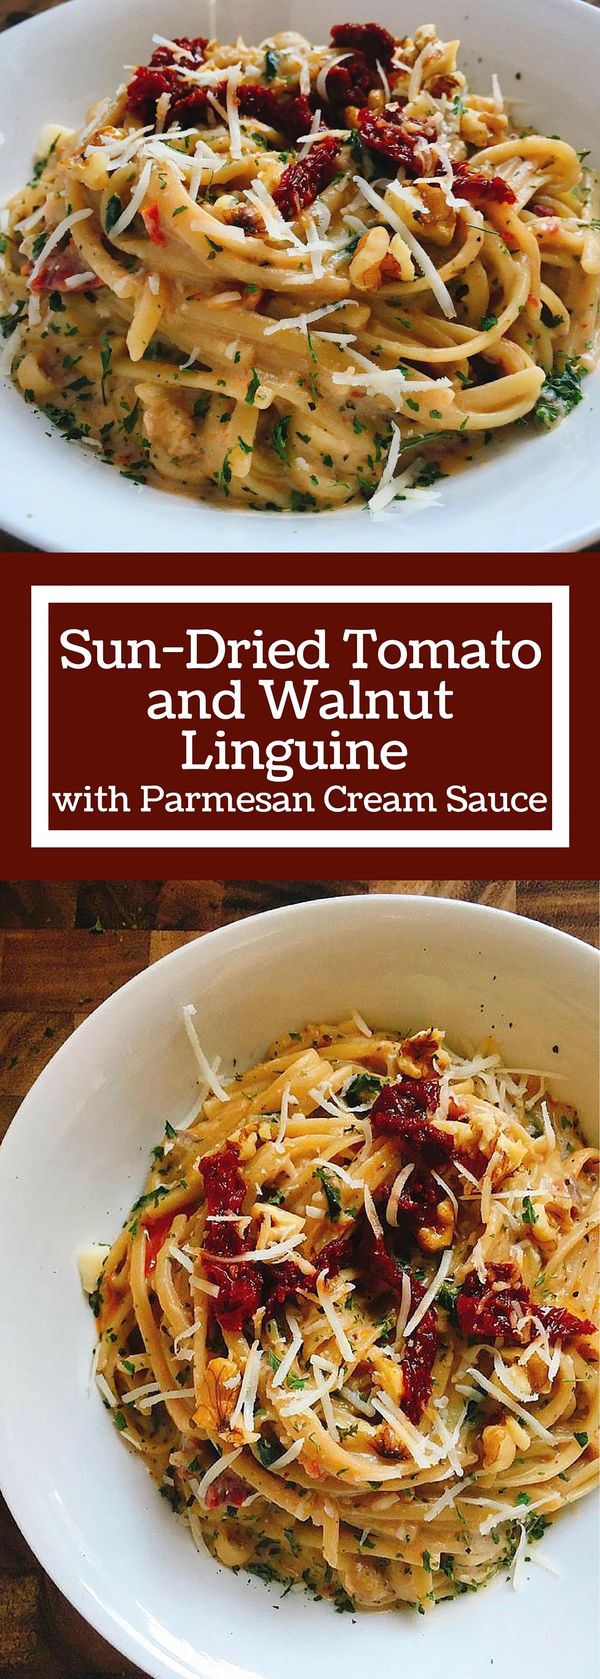 Sun-dried Tomato and Walnut Linguine with Parmesan Cream Sauce